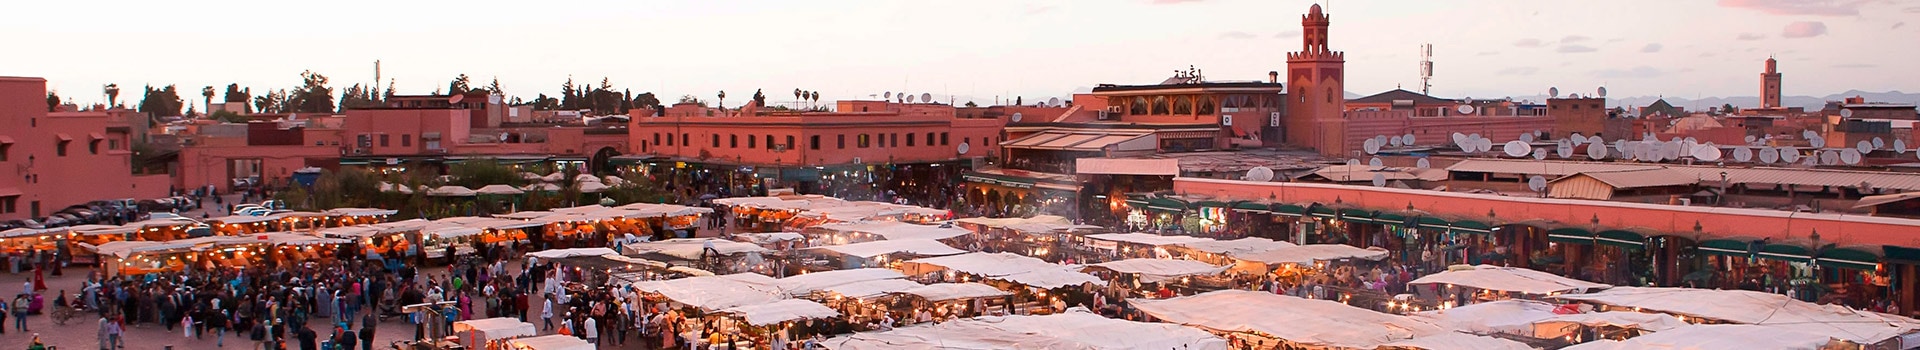 Zaragoza - Marrakech